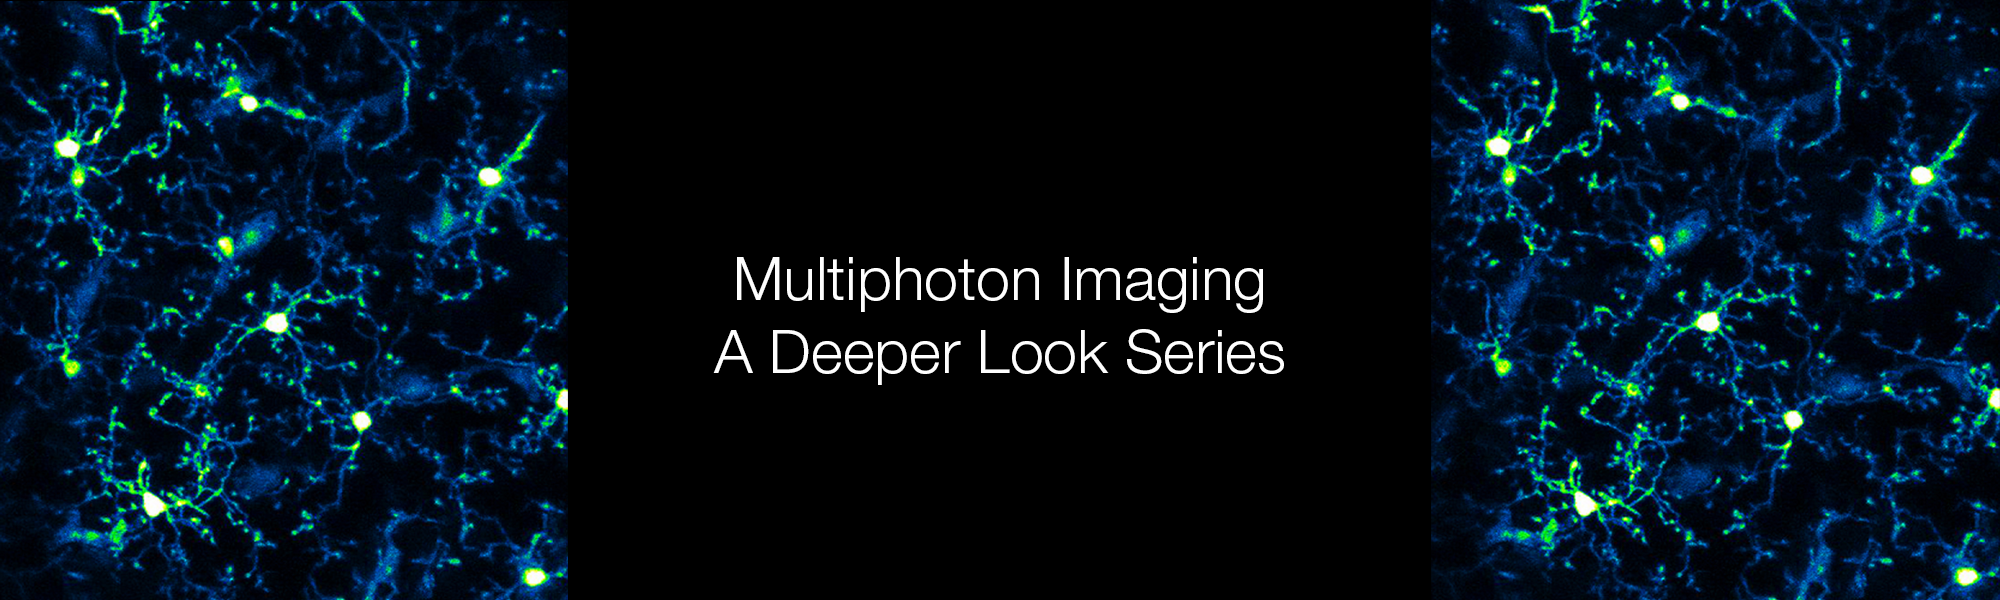 Multiphoton Imaging Series